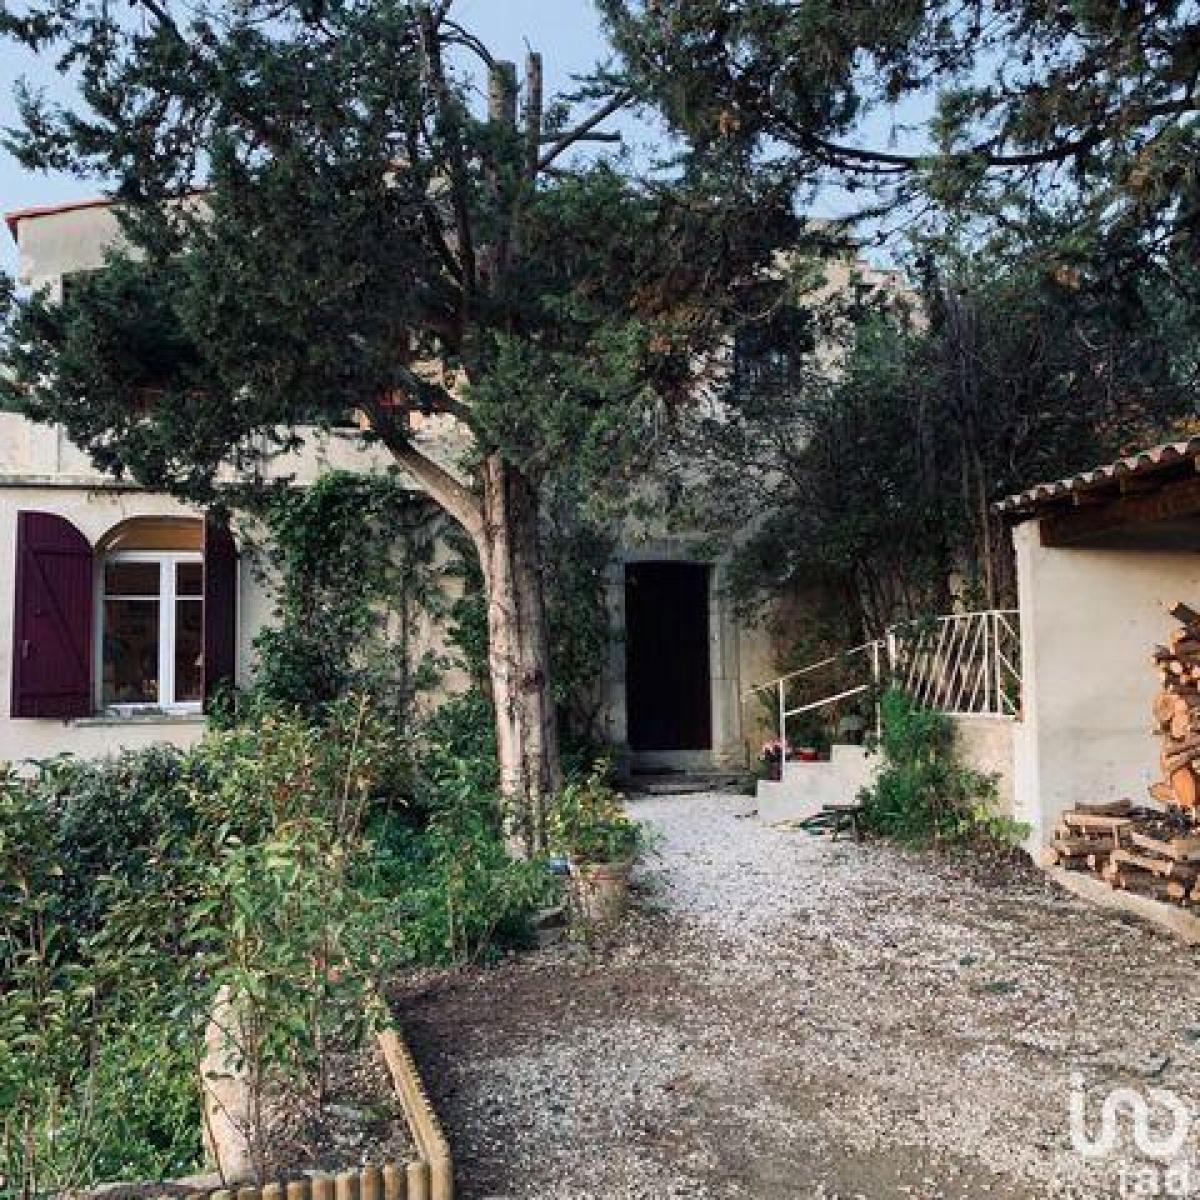 Picture of Home For Sale in Le Castellet, Cote d'Azur, France